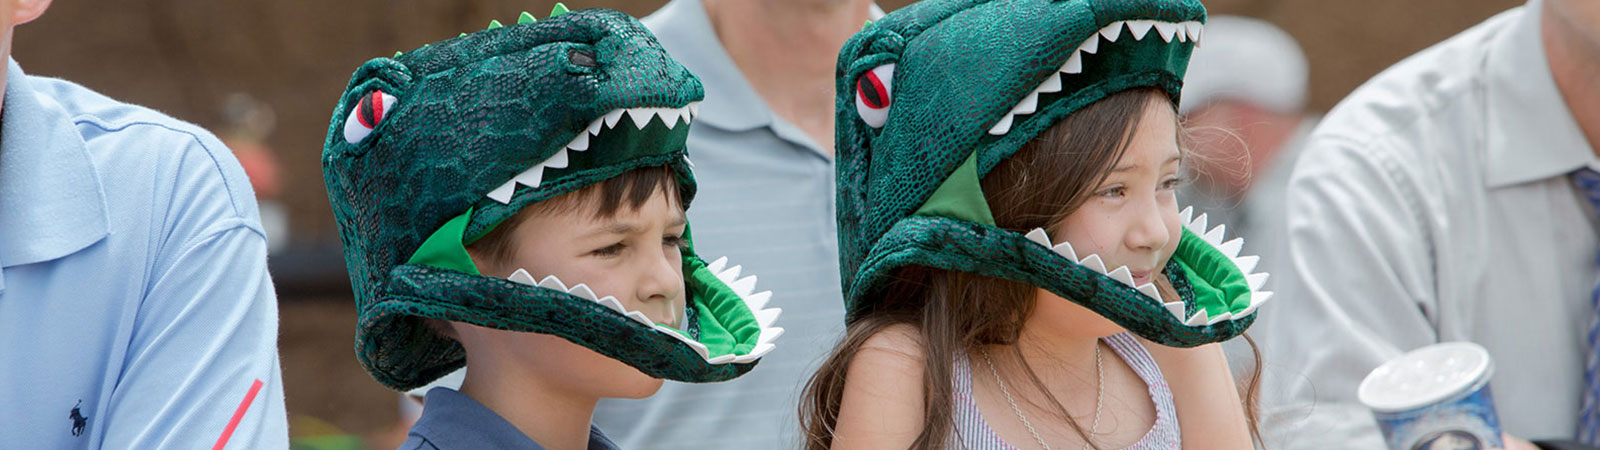 Kids in dinosaur masks